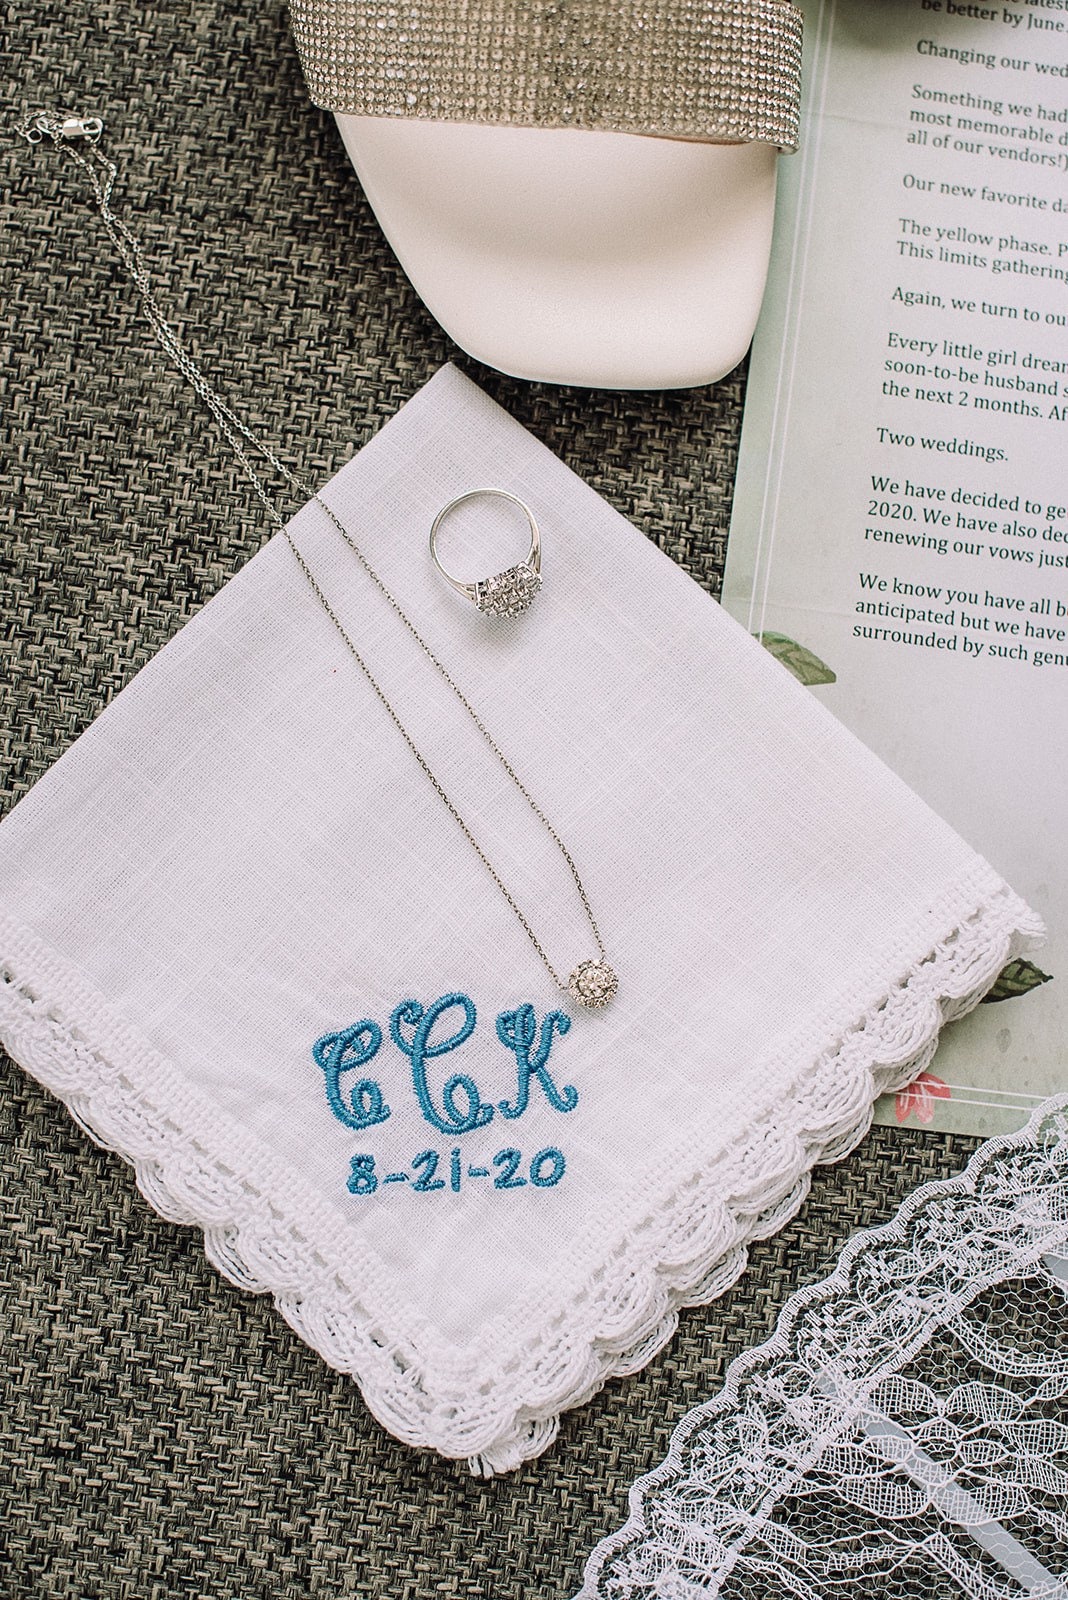 Monogrammed Personalized Handkerchiefs - Great Wedding Gift - Monogrammed Hanky